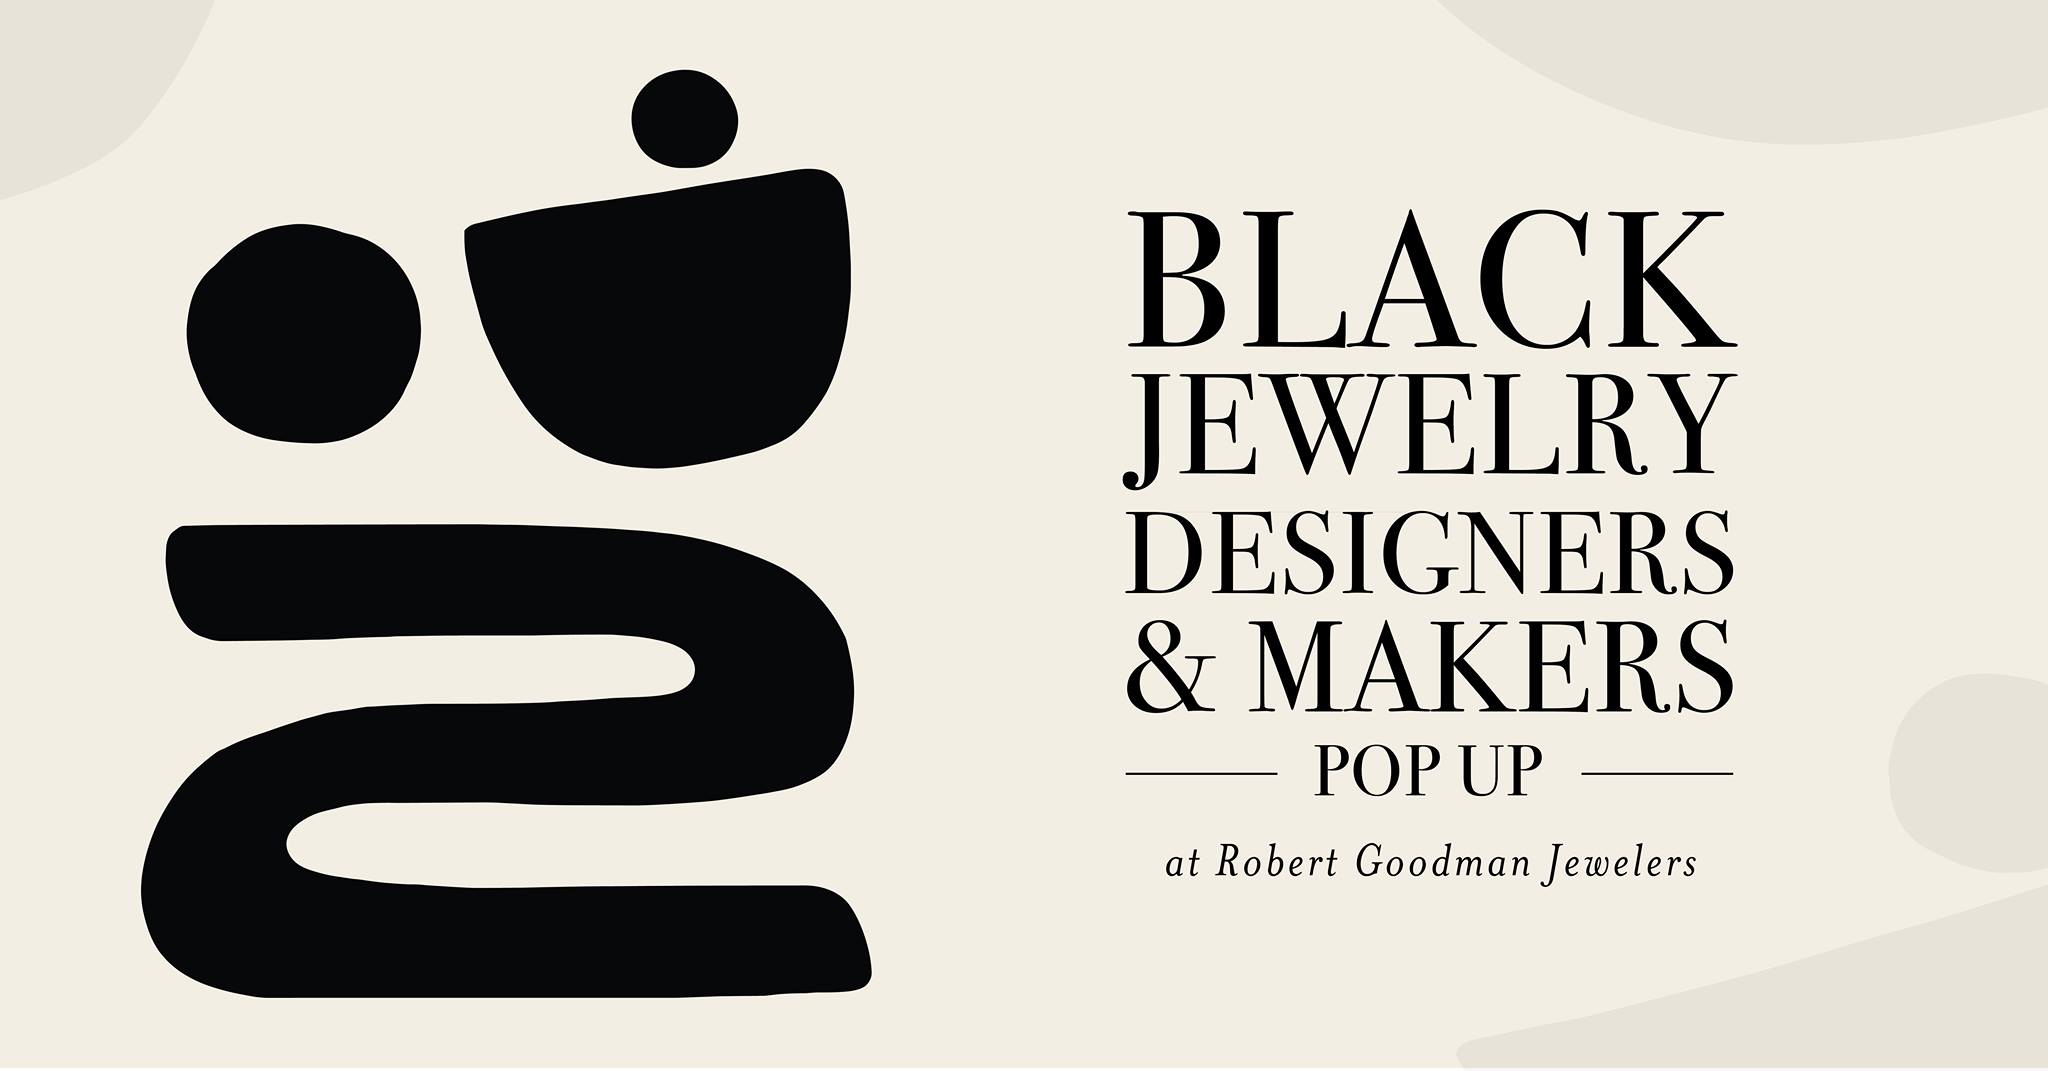 Black Jewelery Designers & Makers Pop-up